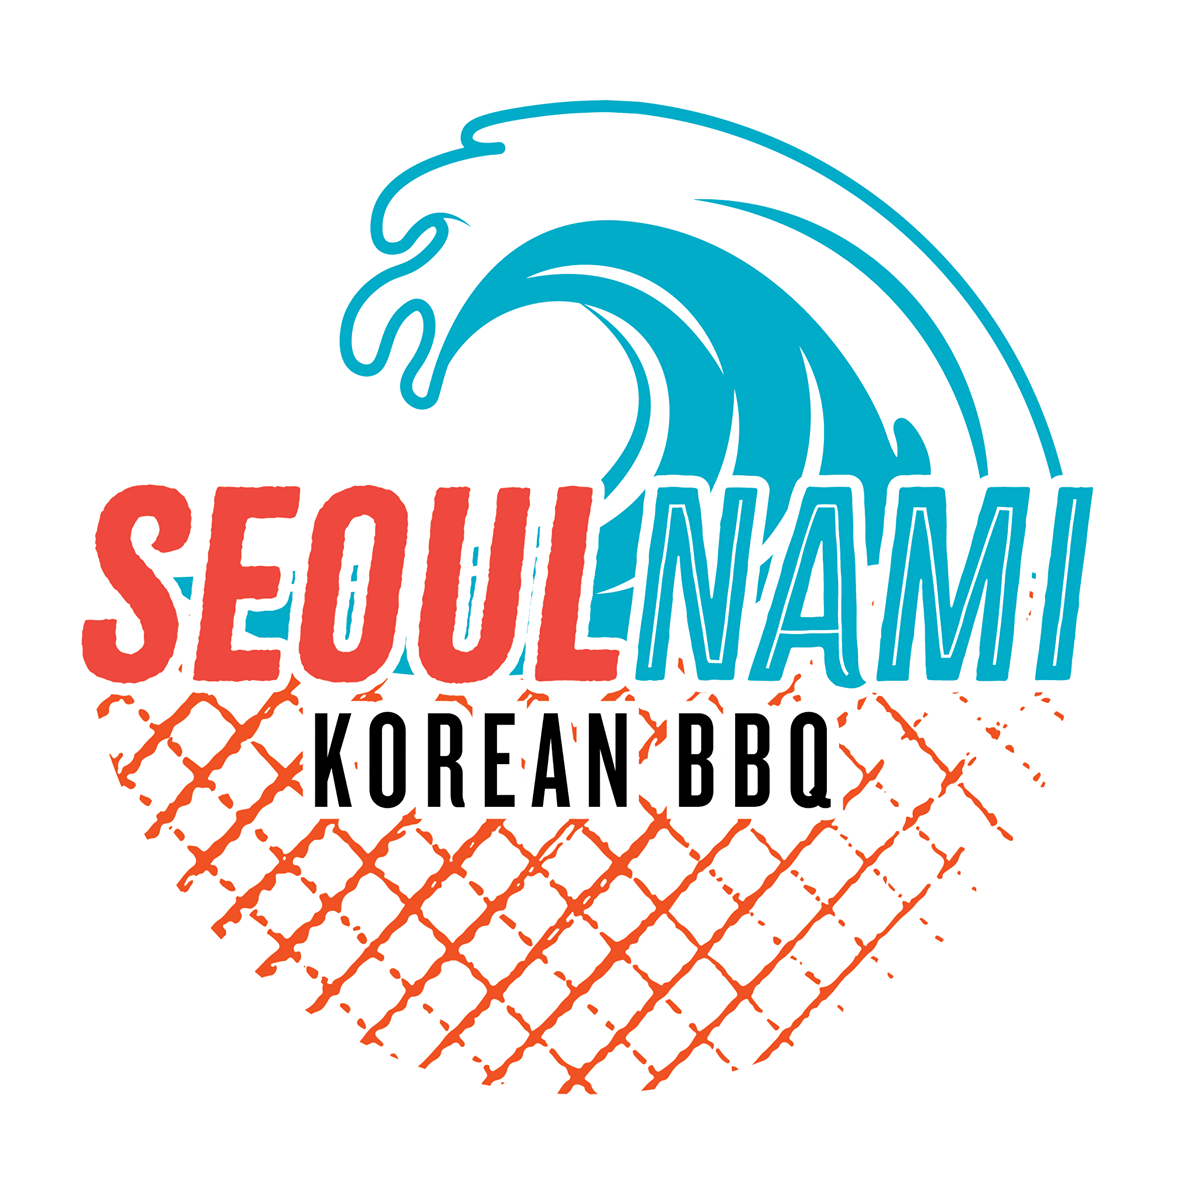 Seoulnami Korean BBQ